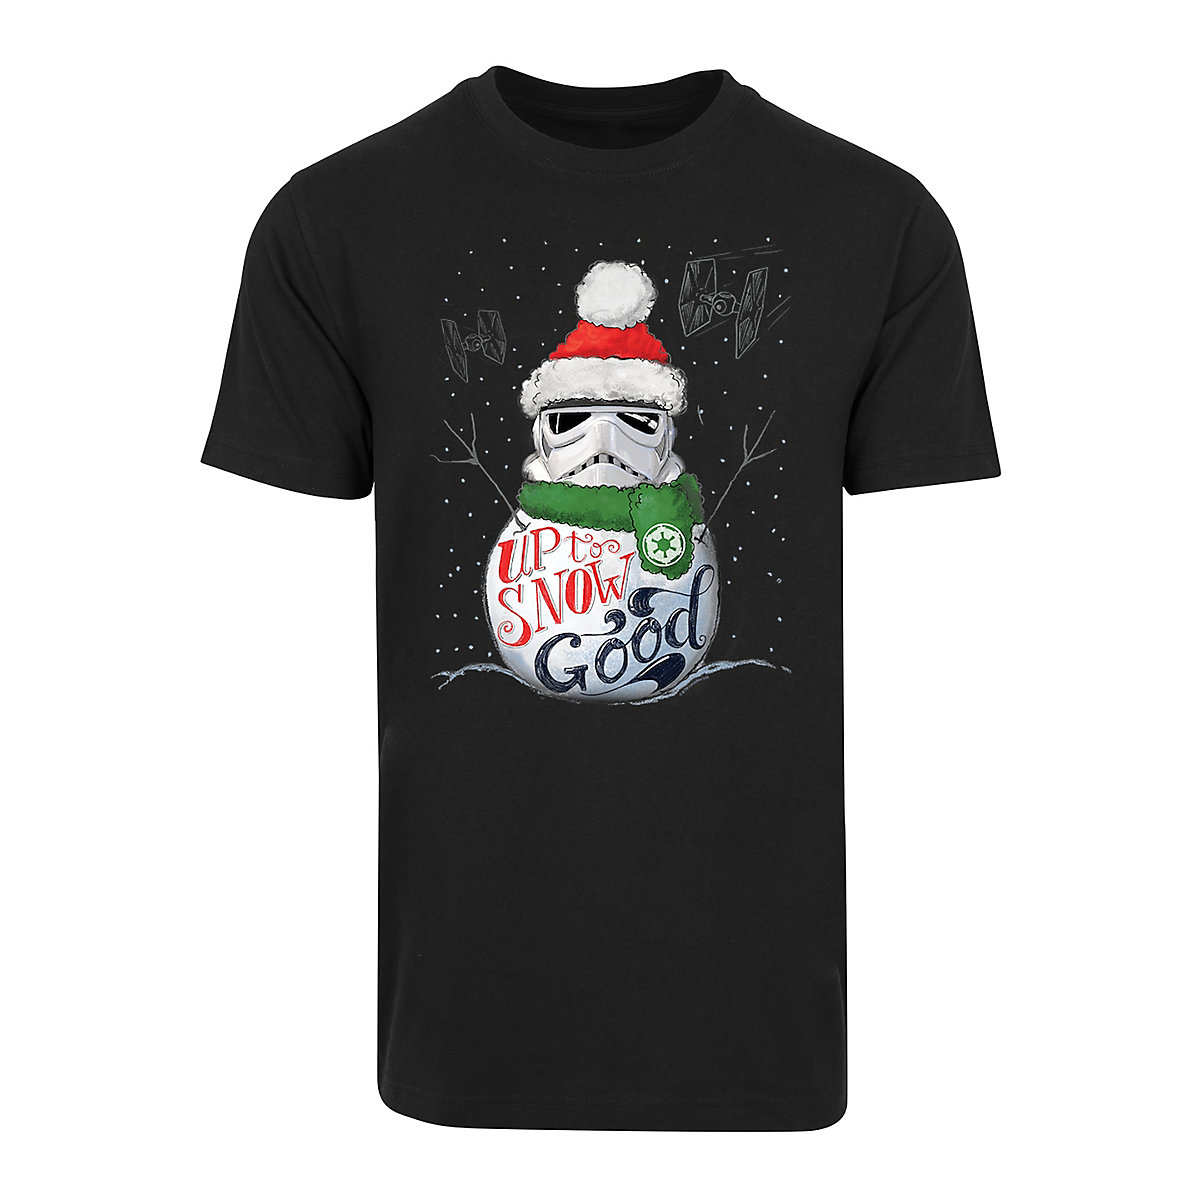 Star Wars Star Wars Stromtrooper Up To Snow Good Premium Krieg der Sterne Fan Merch Darth Vader Yoda Han Solo Boba Fett Mandalorian R2D2 T-Shirts schwarz